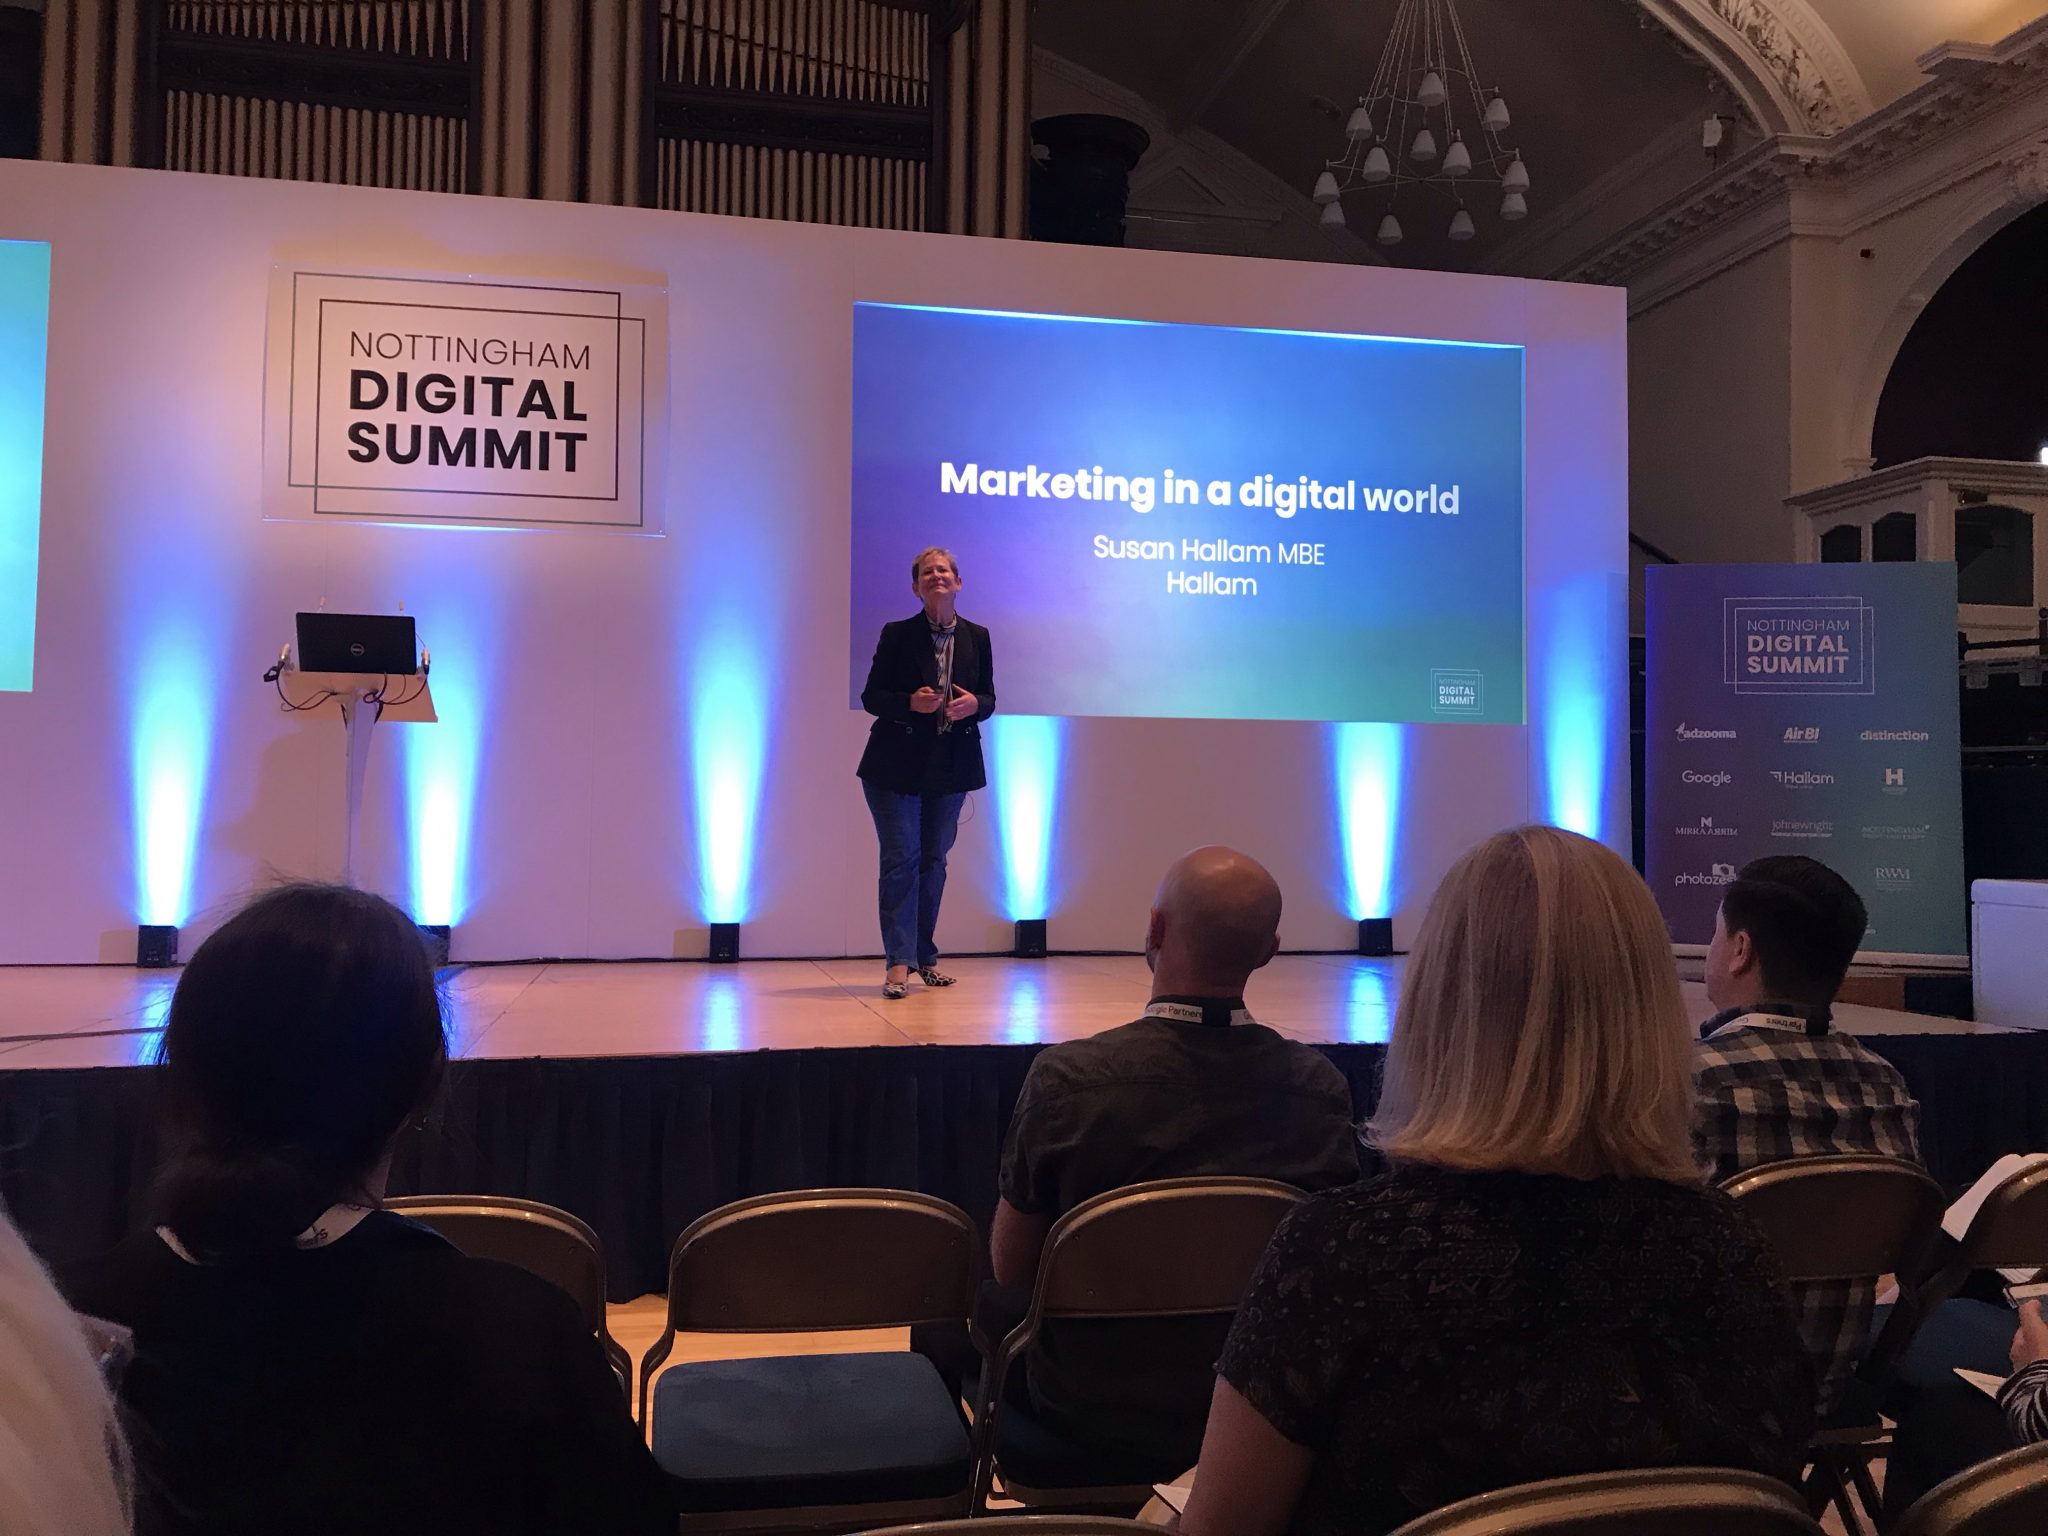 Susan Hallam, Nottingham Digital Summit